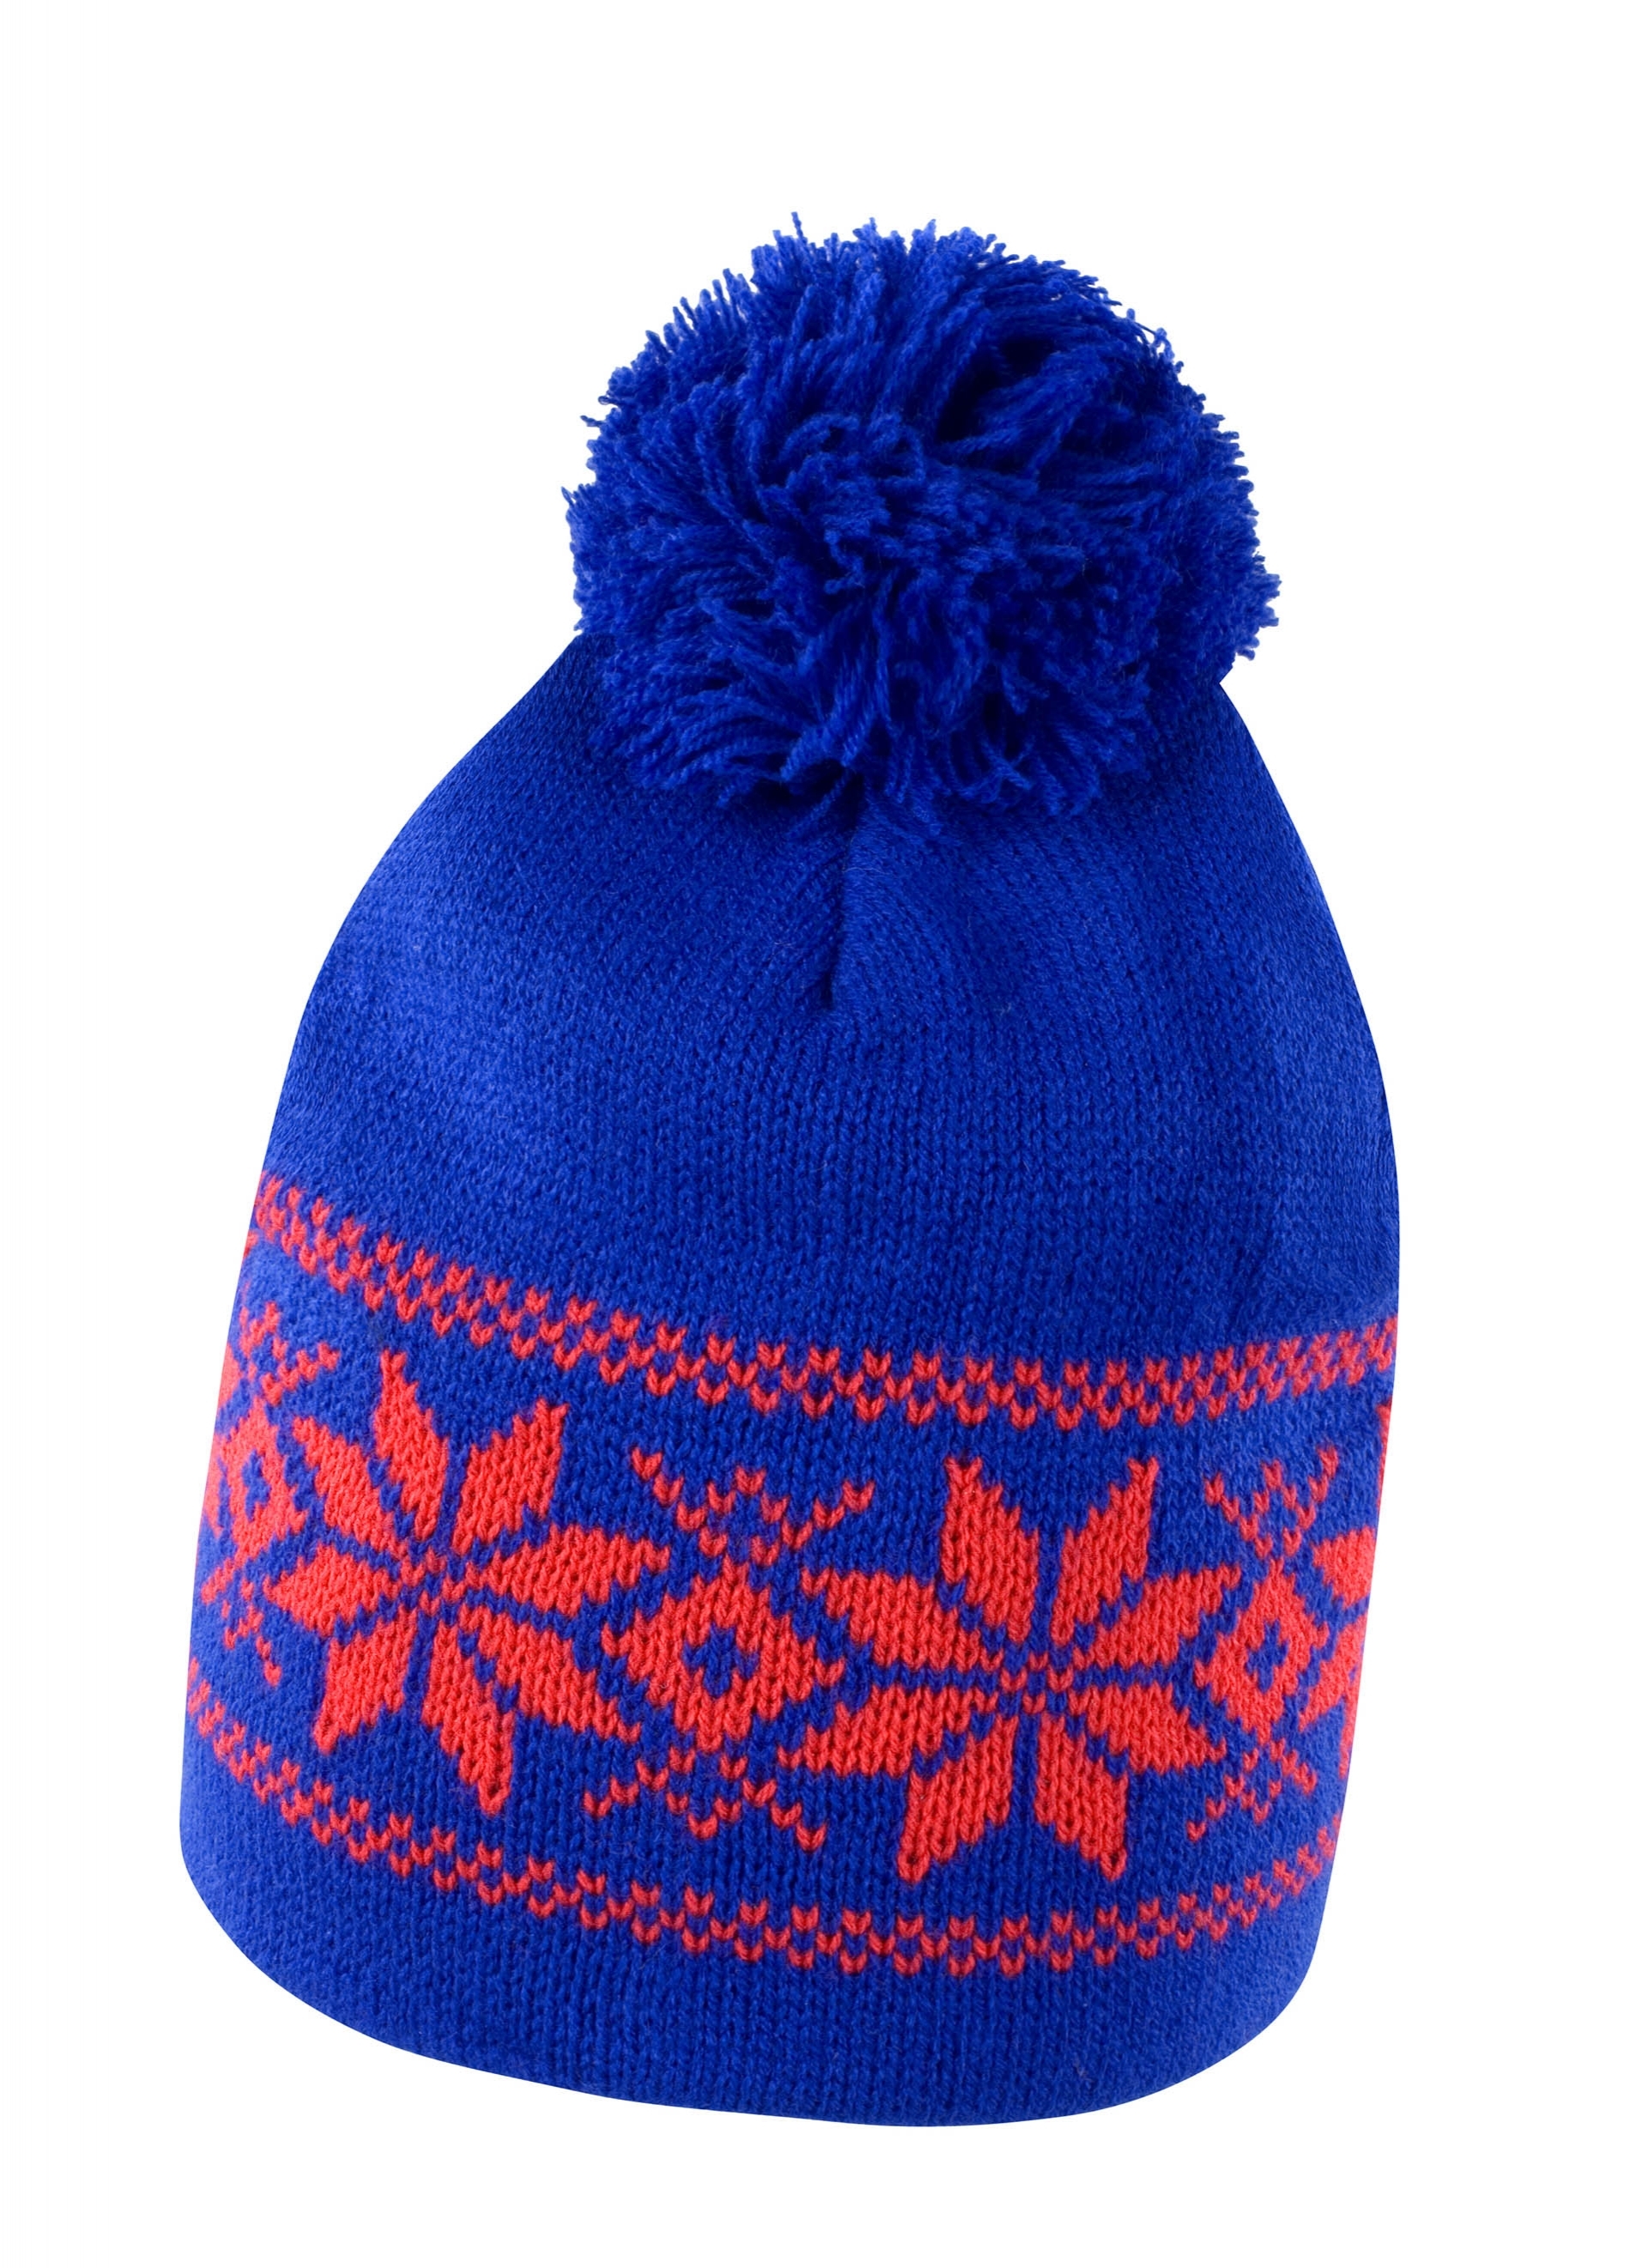 Fair Isles Knitted Hat Royal/Red Bleu